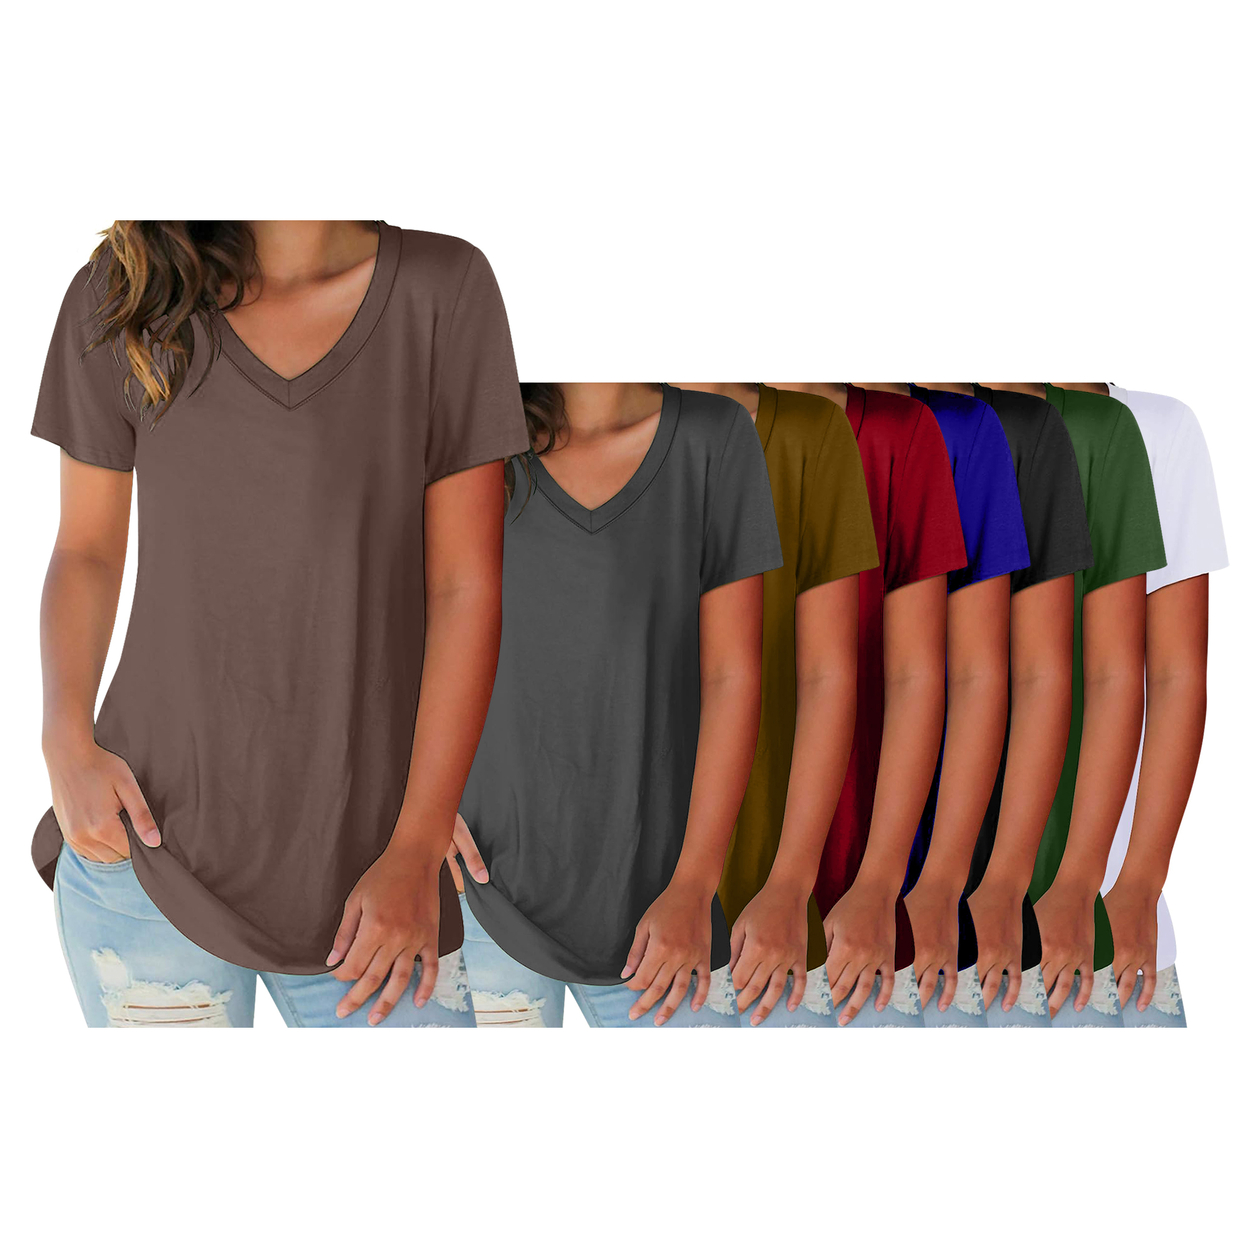 3-Pack: Women's Ultra Soft Smooth Cotton Blend Basic V-Neck Short Sleeve Shirts - Black, Navy, Brown, X-large